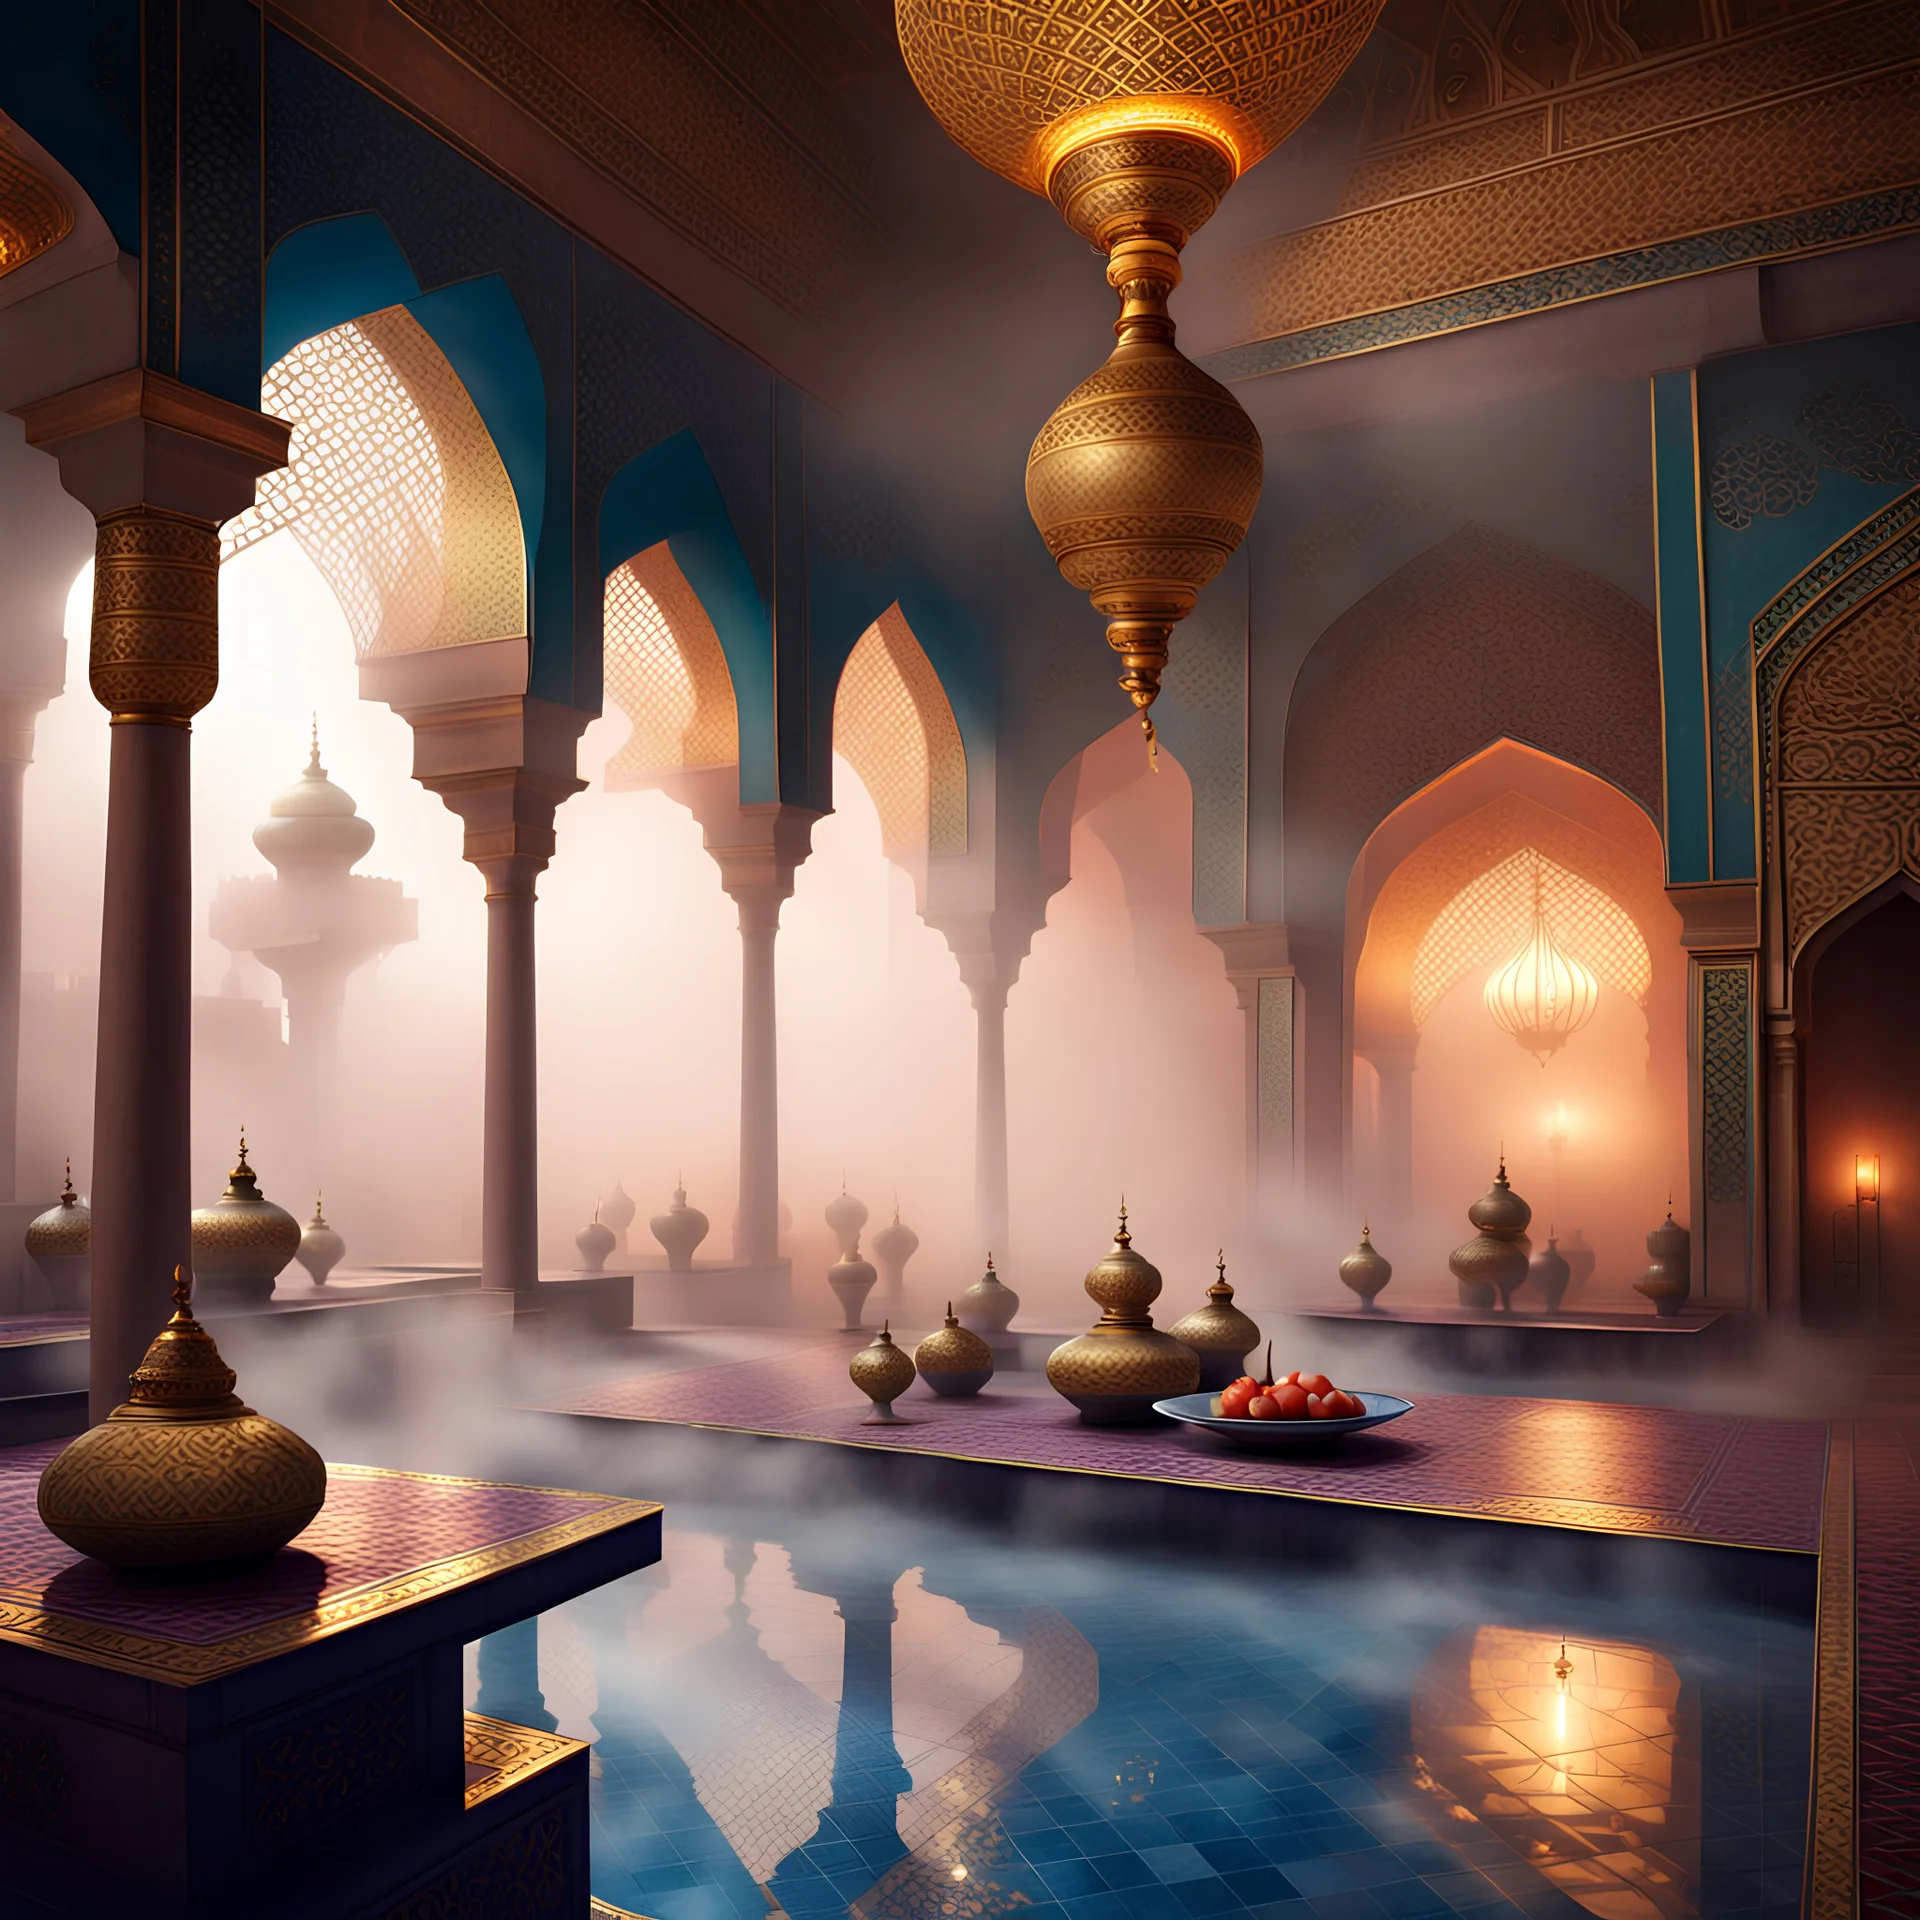 Luxurious persian palace, mist, magic, genie, thick fog, interior, arabian nights, riches, smoke, feast